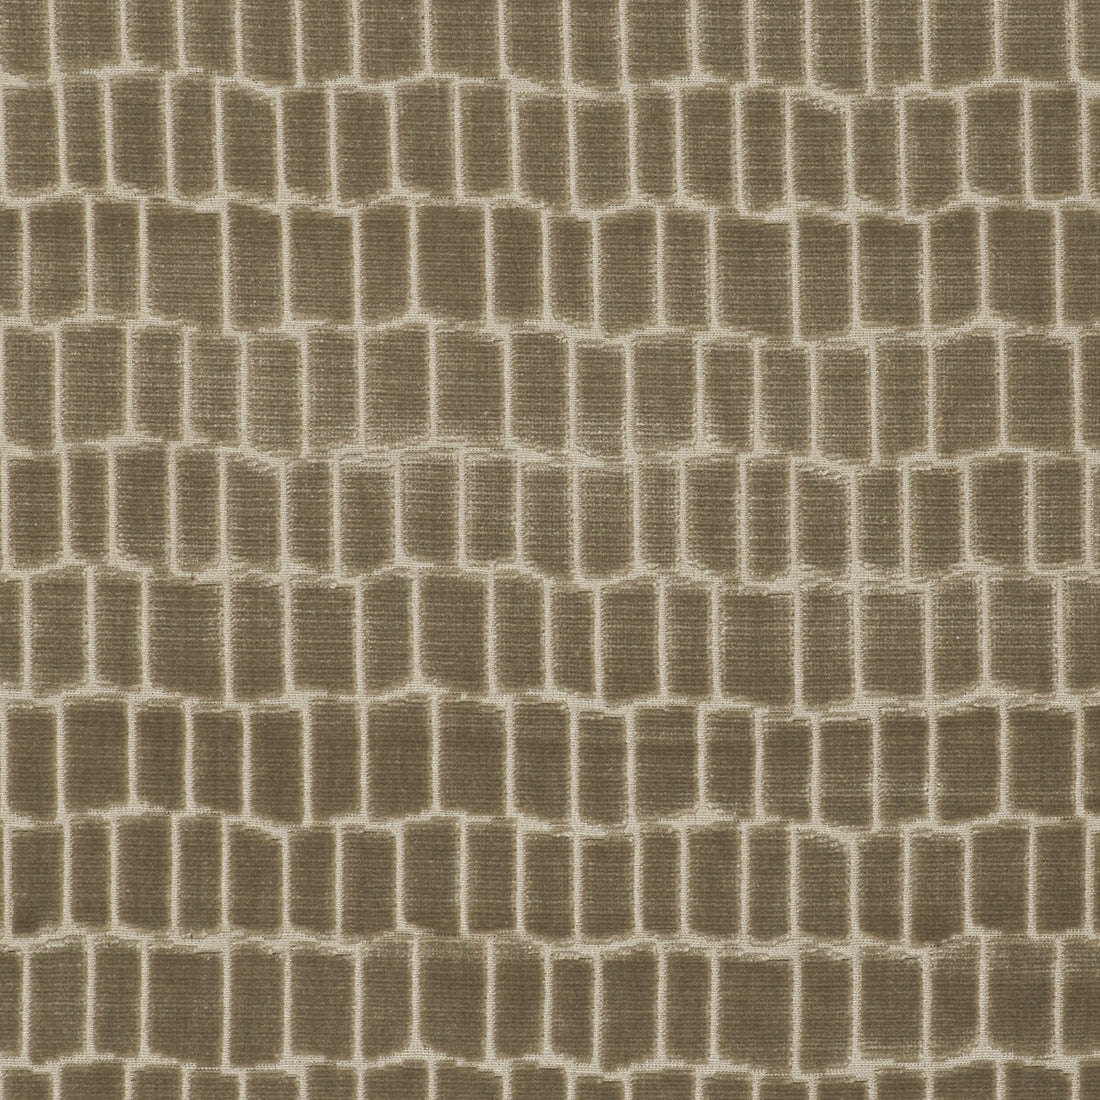 Maximo fabric in lino color - pattern LCT1015.002.0 - by Gaston y Daniela in the Lorenzo Castillo V collection